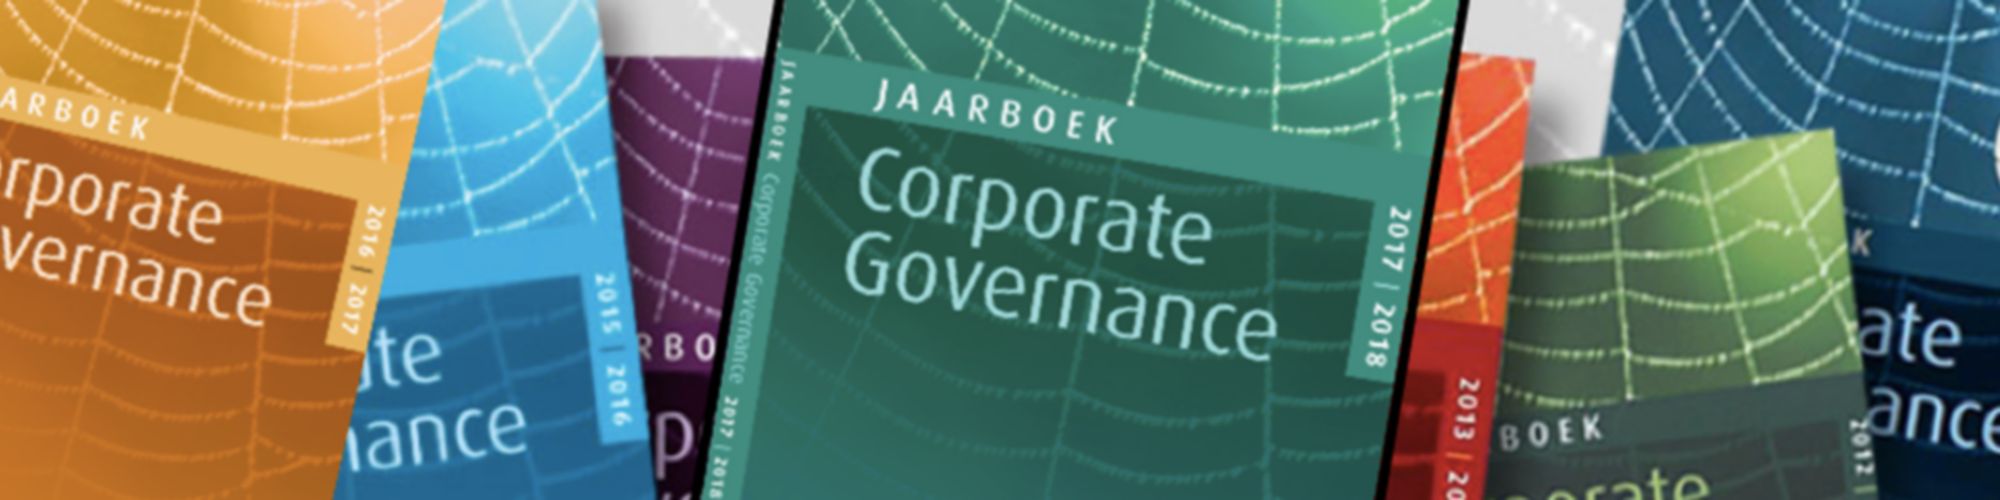 Jaarboek Corporate governance